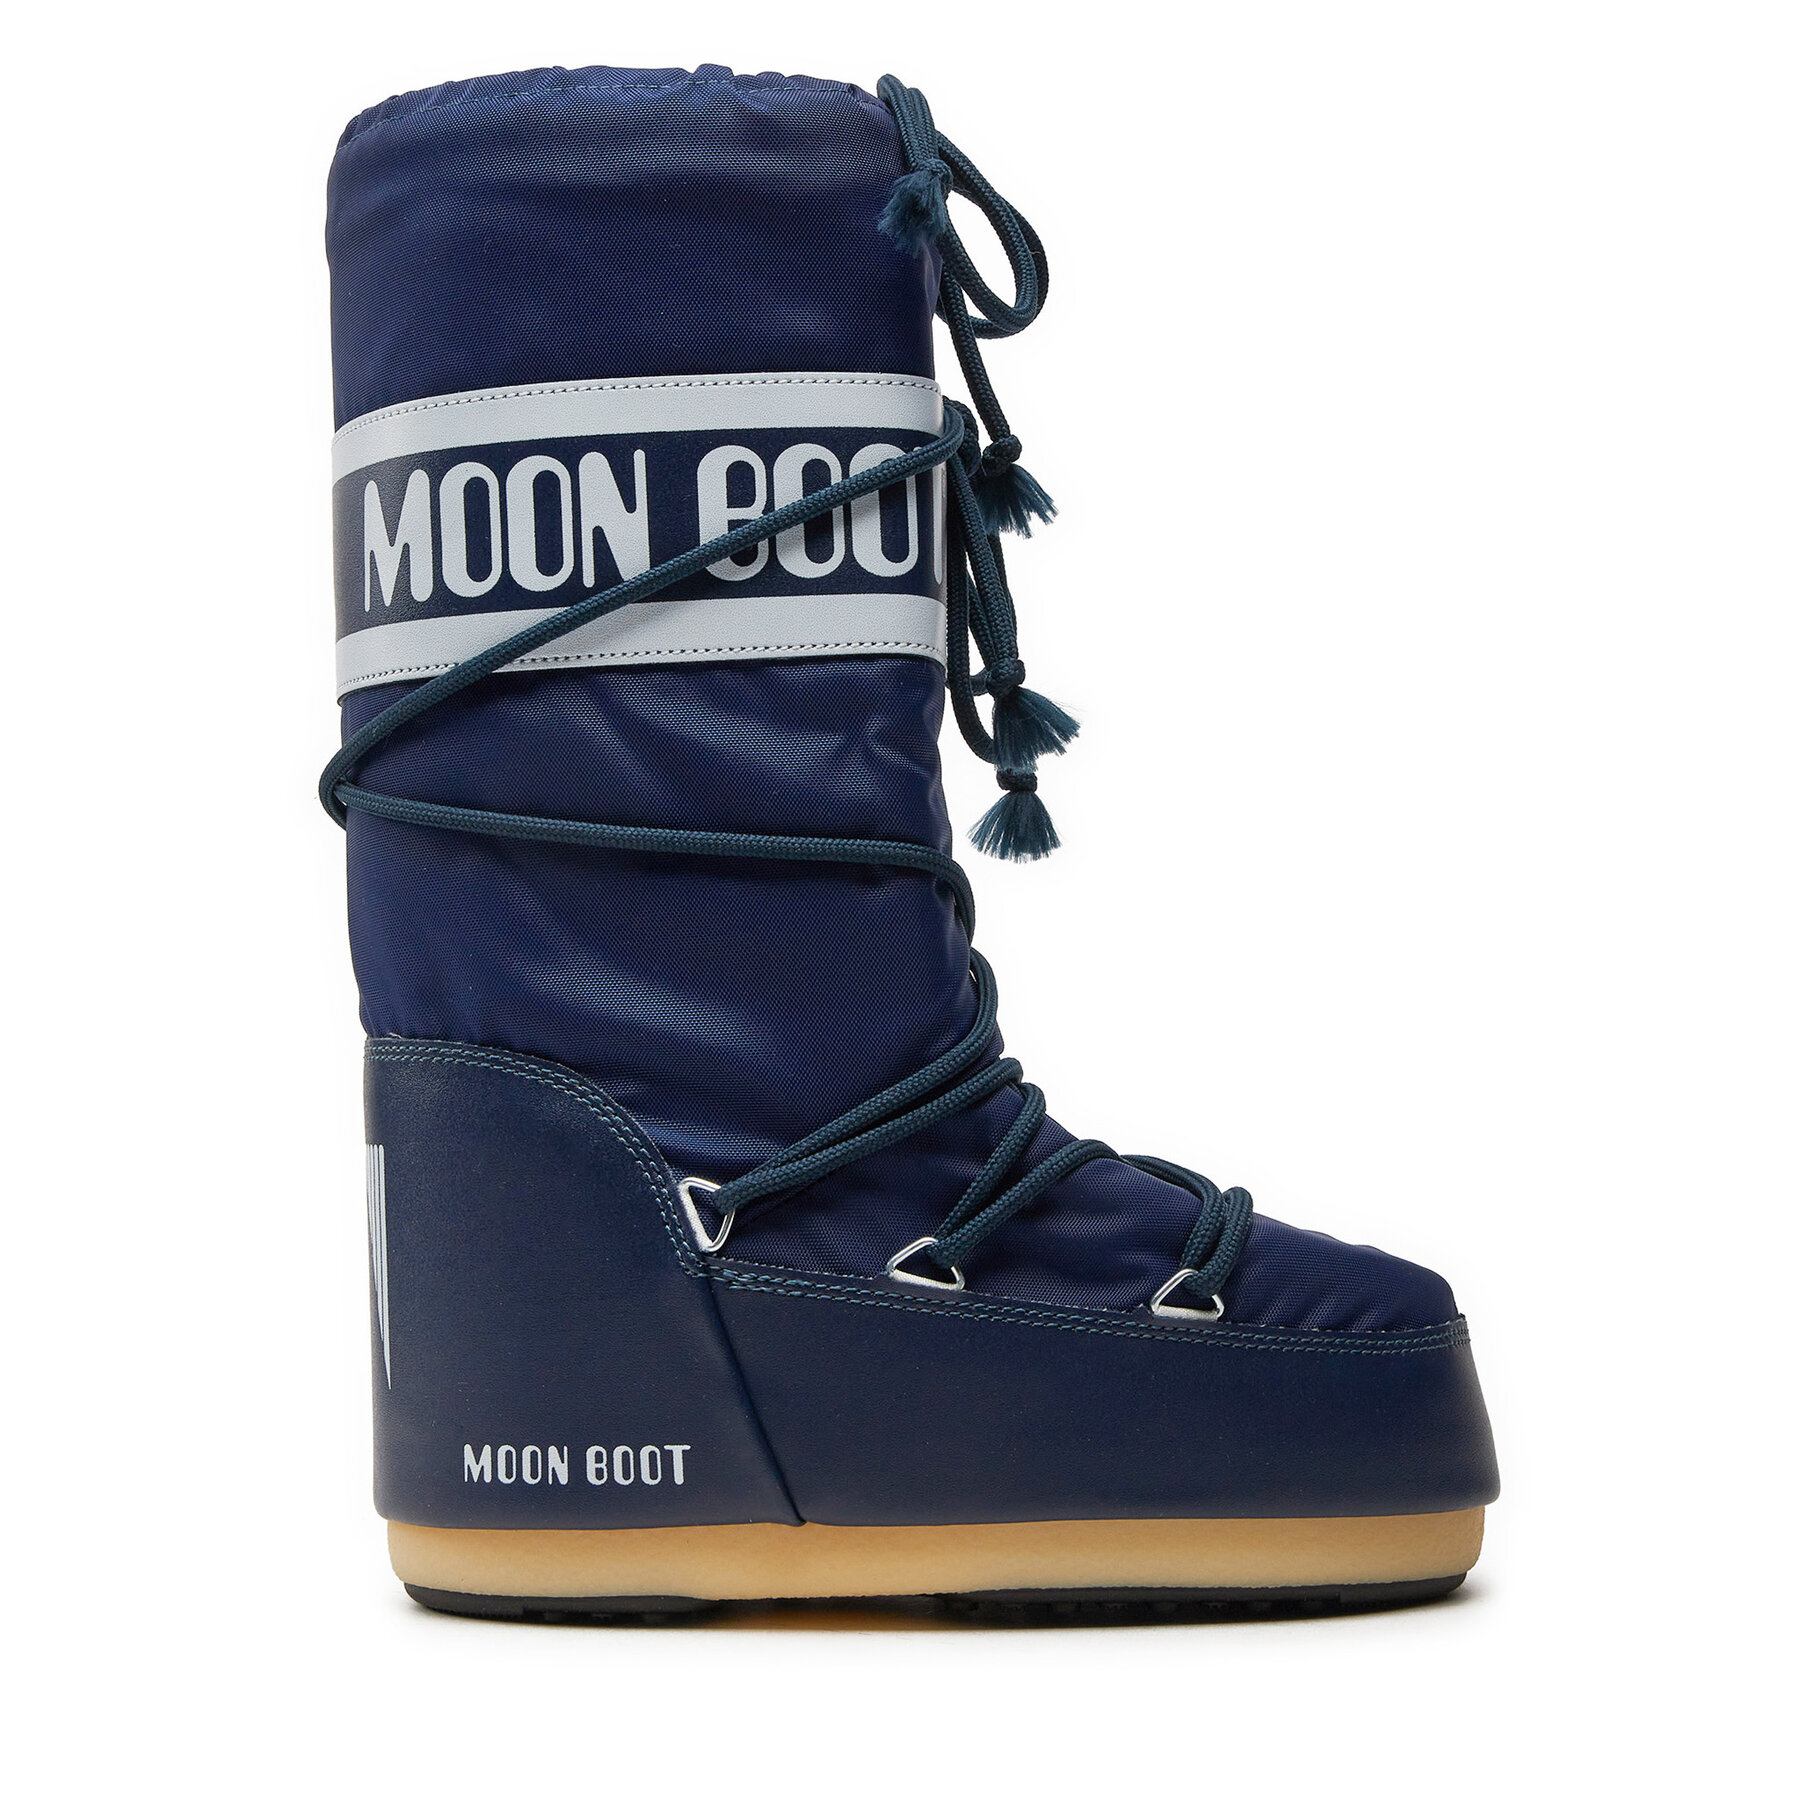 Comprar en oferta Moon Boot Nylon navy